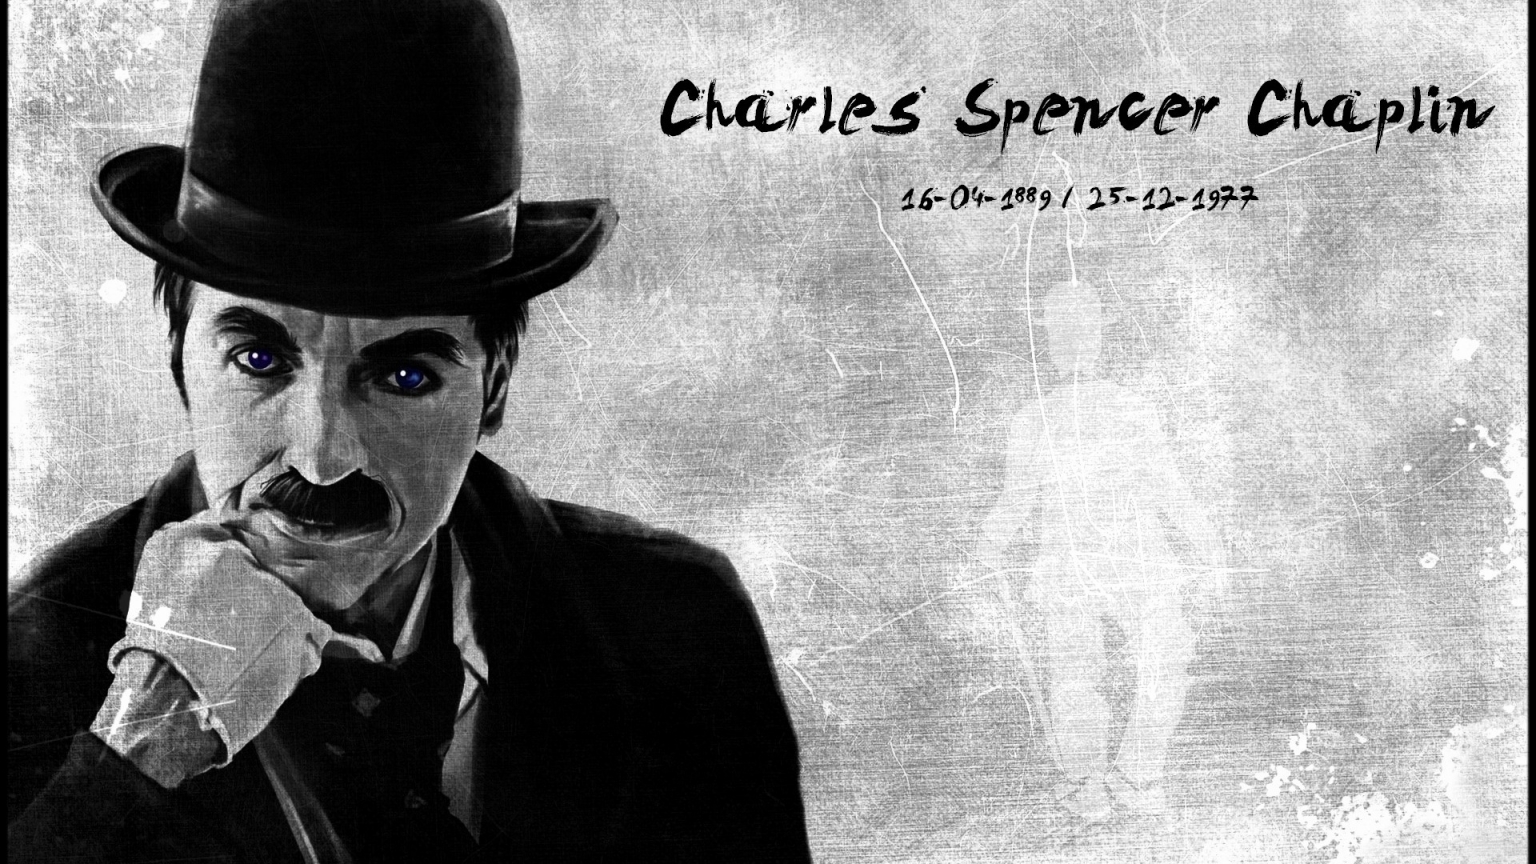 Charles Chaplin for 1536 x 864 HDTV resolution